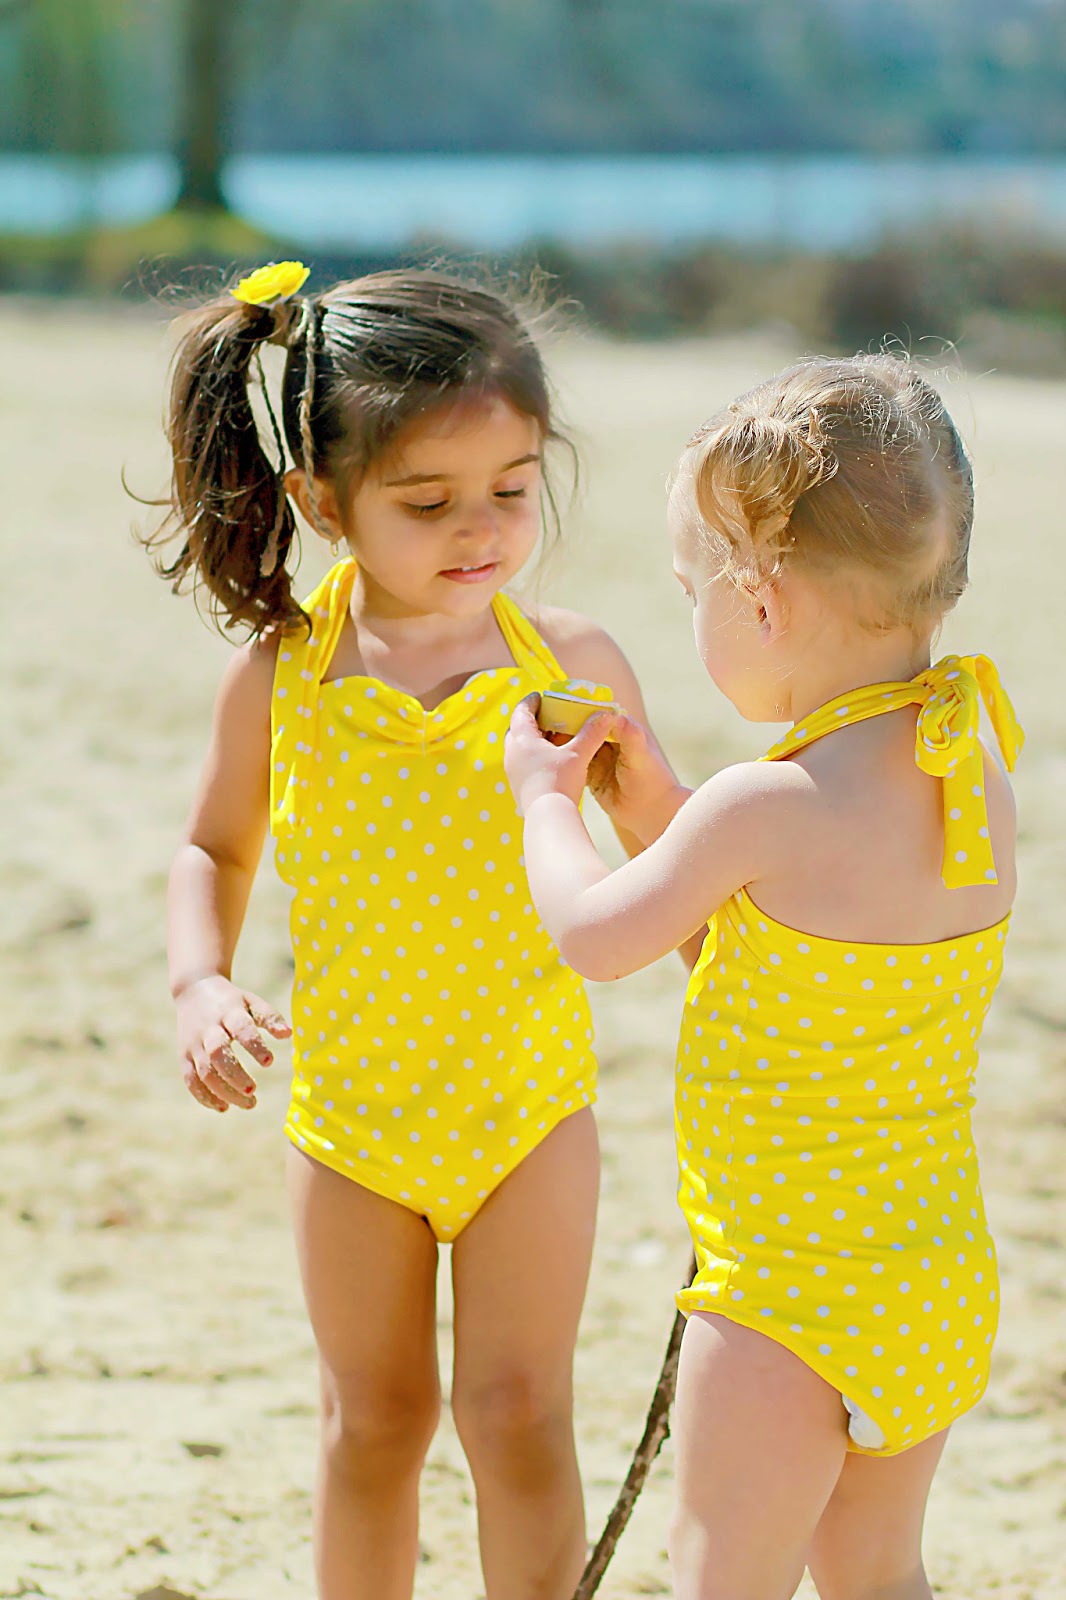 Capes & Crowns: Yellow Polka Dot Bikini!